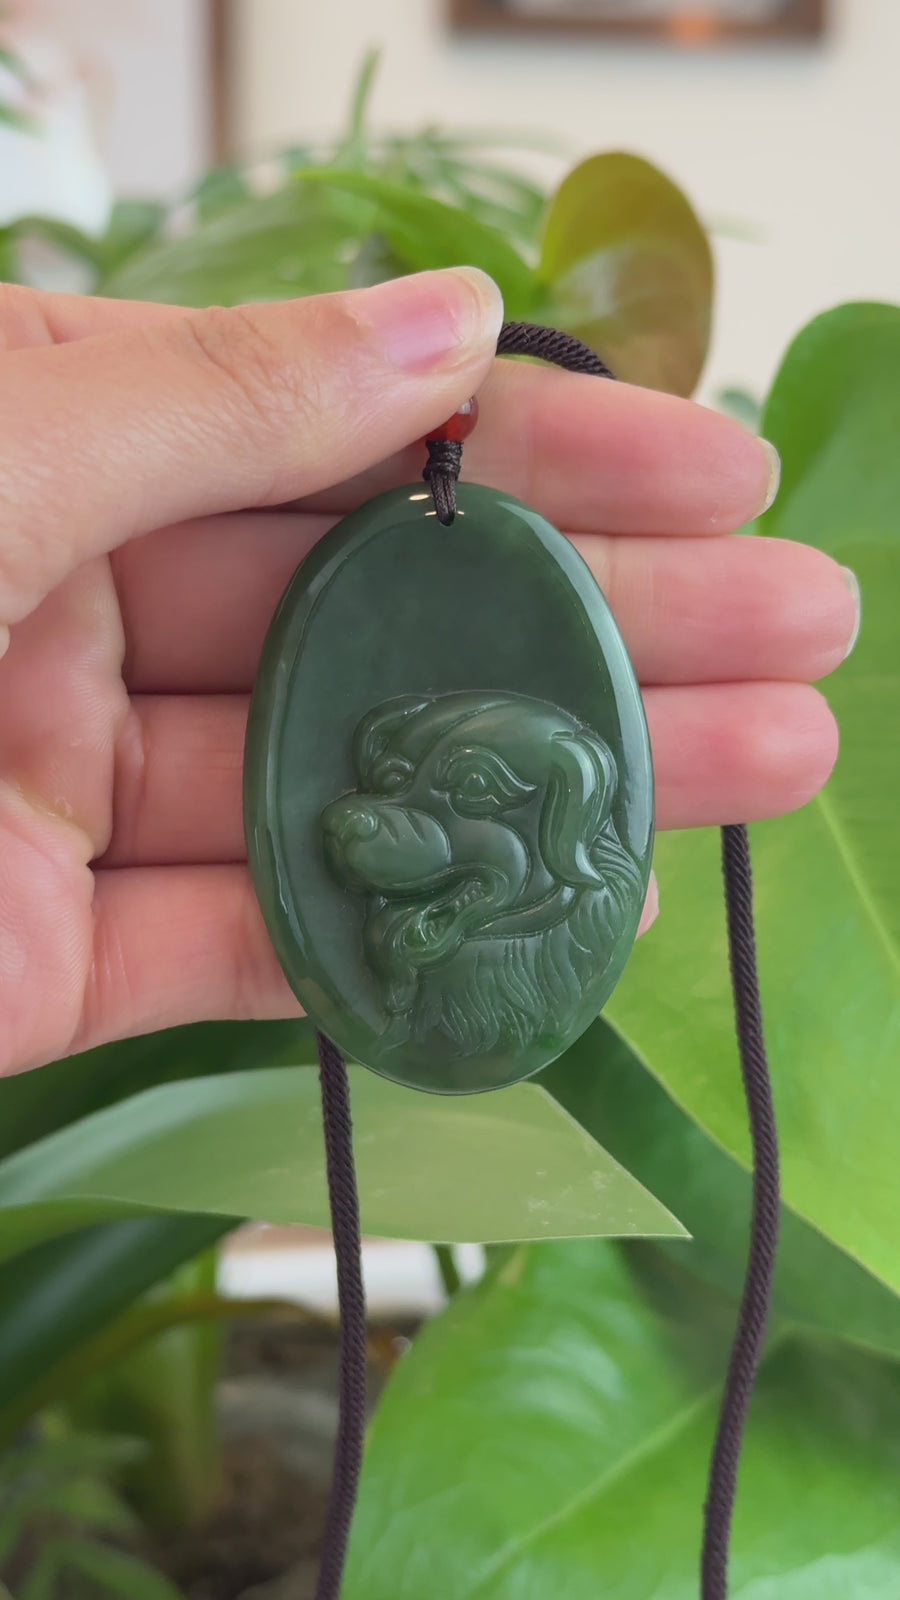 Natural Jade 12 Zodiac: Nephrite Jade Dog Pendant Necklace in Deep Green